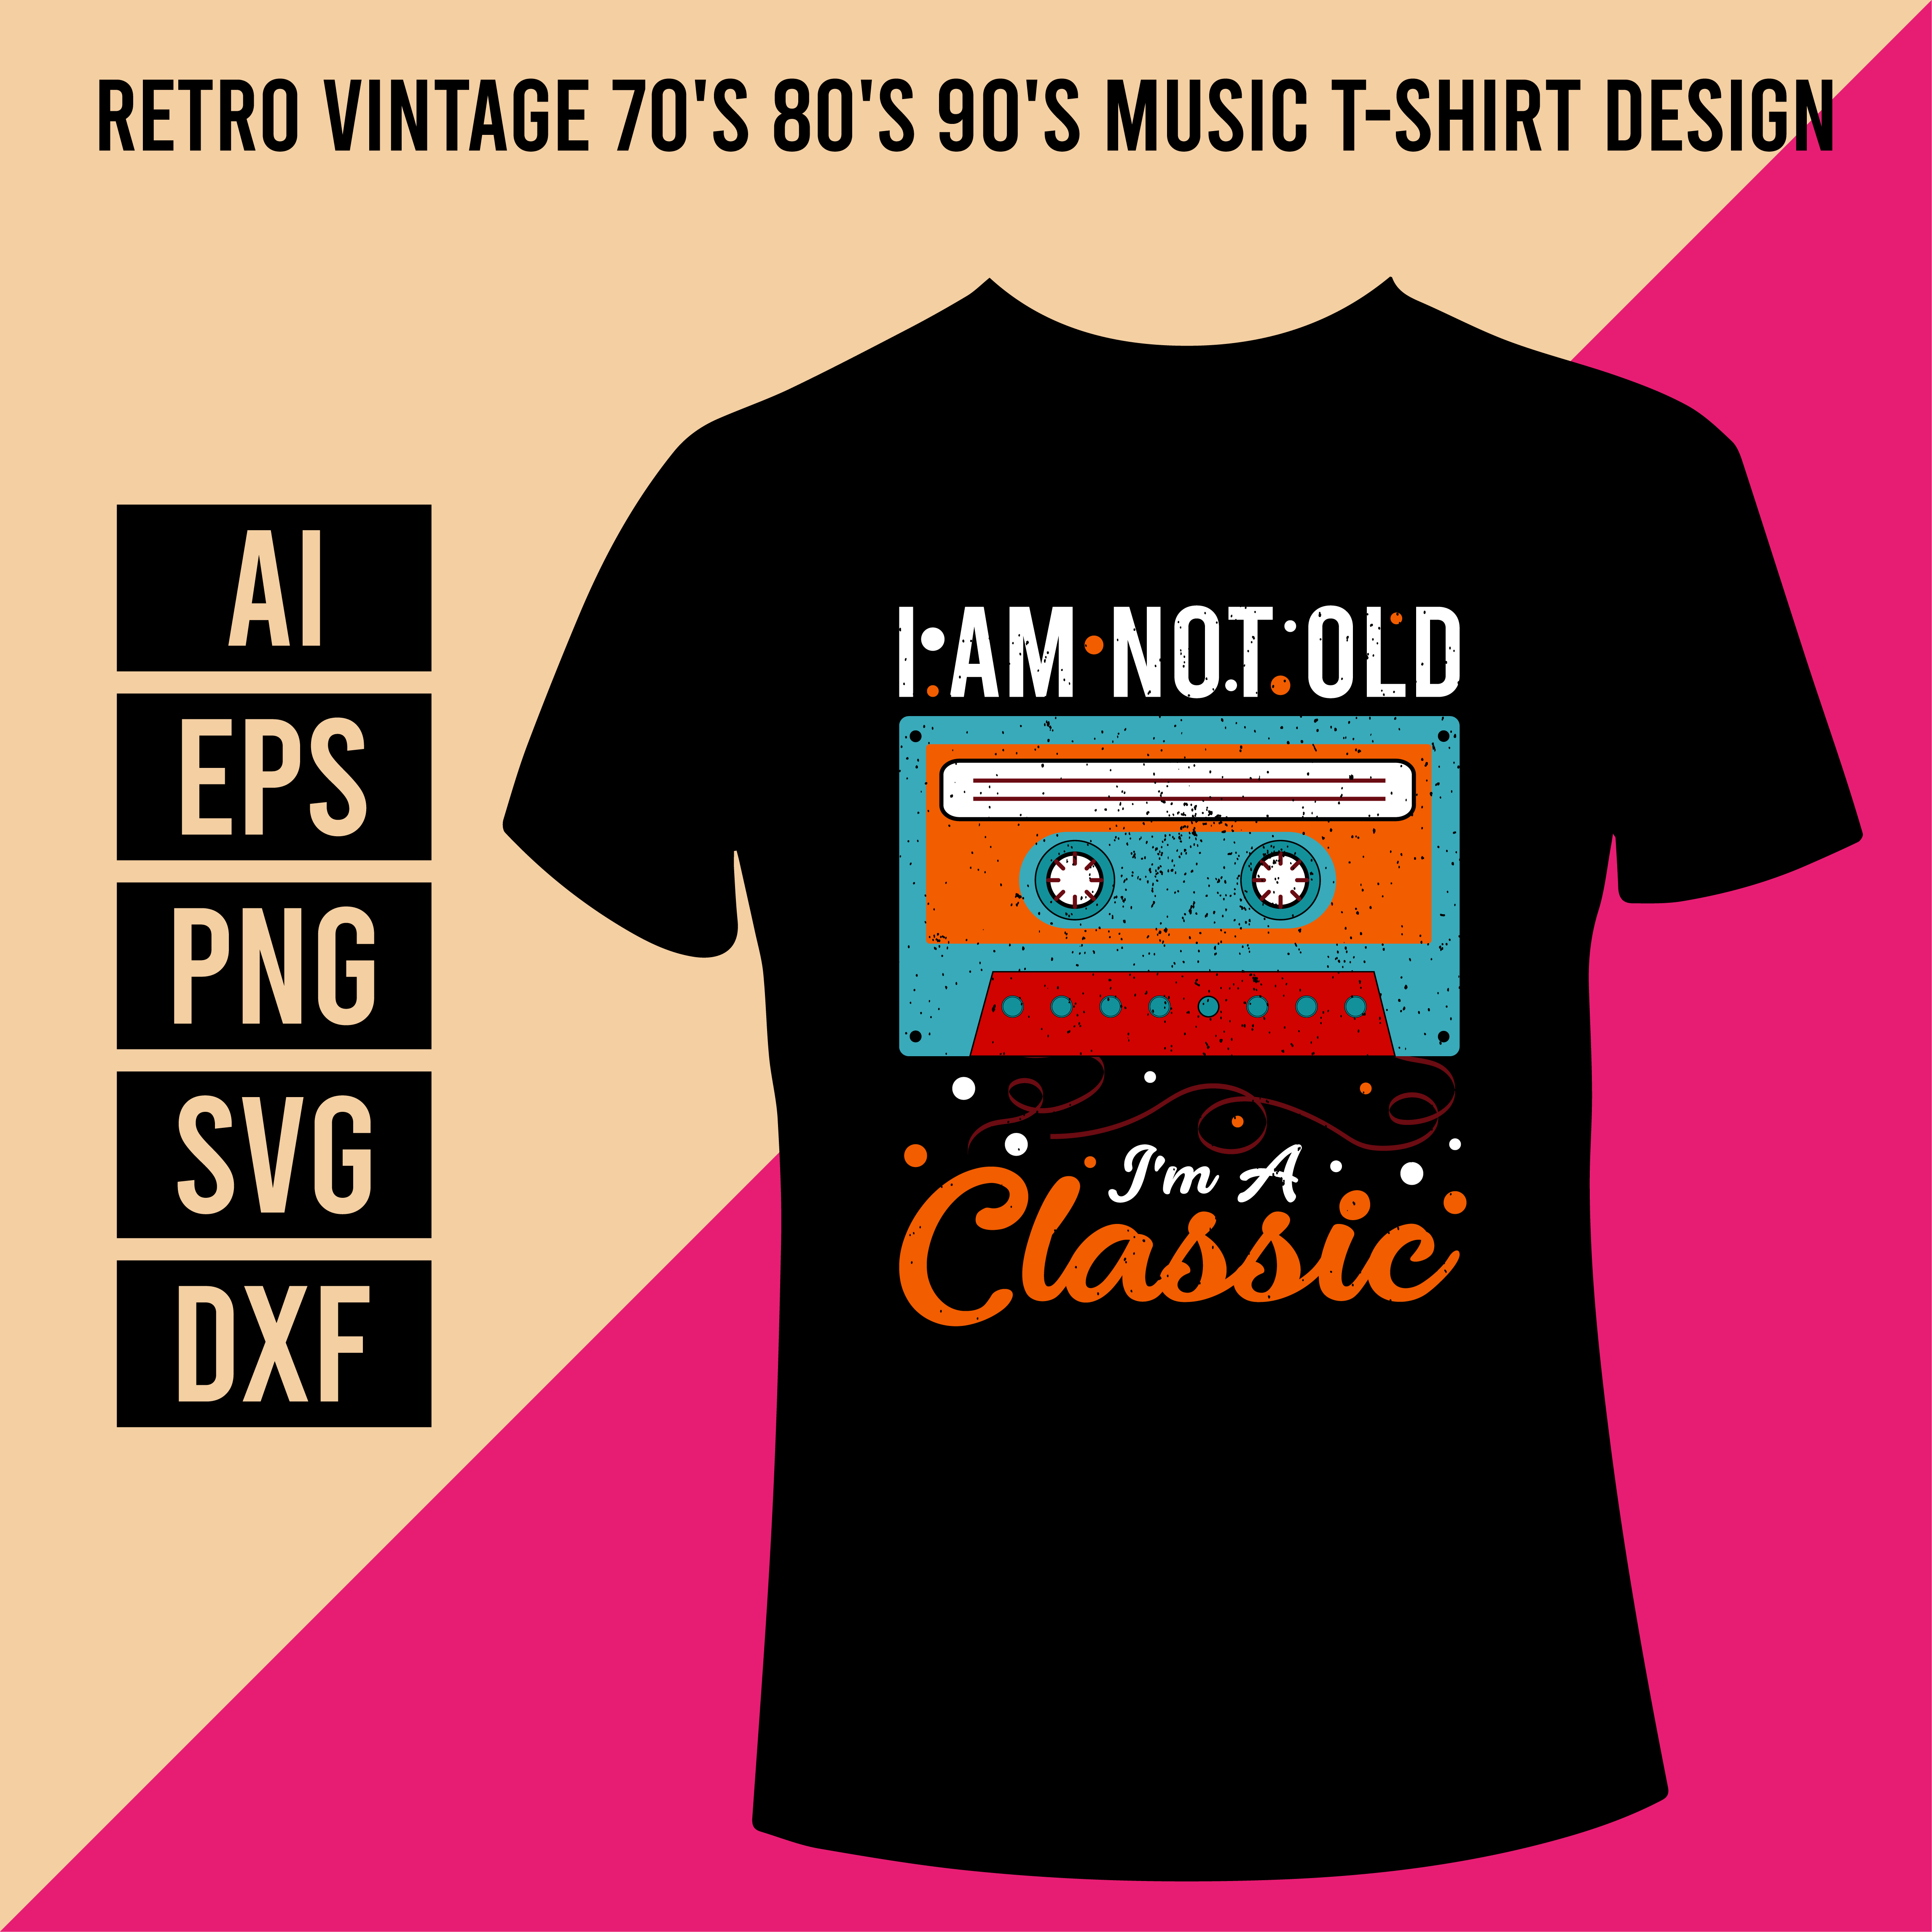 Retro Vintage 70's 80's 90's Music Design -